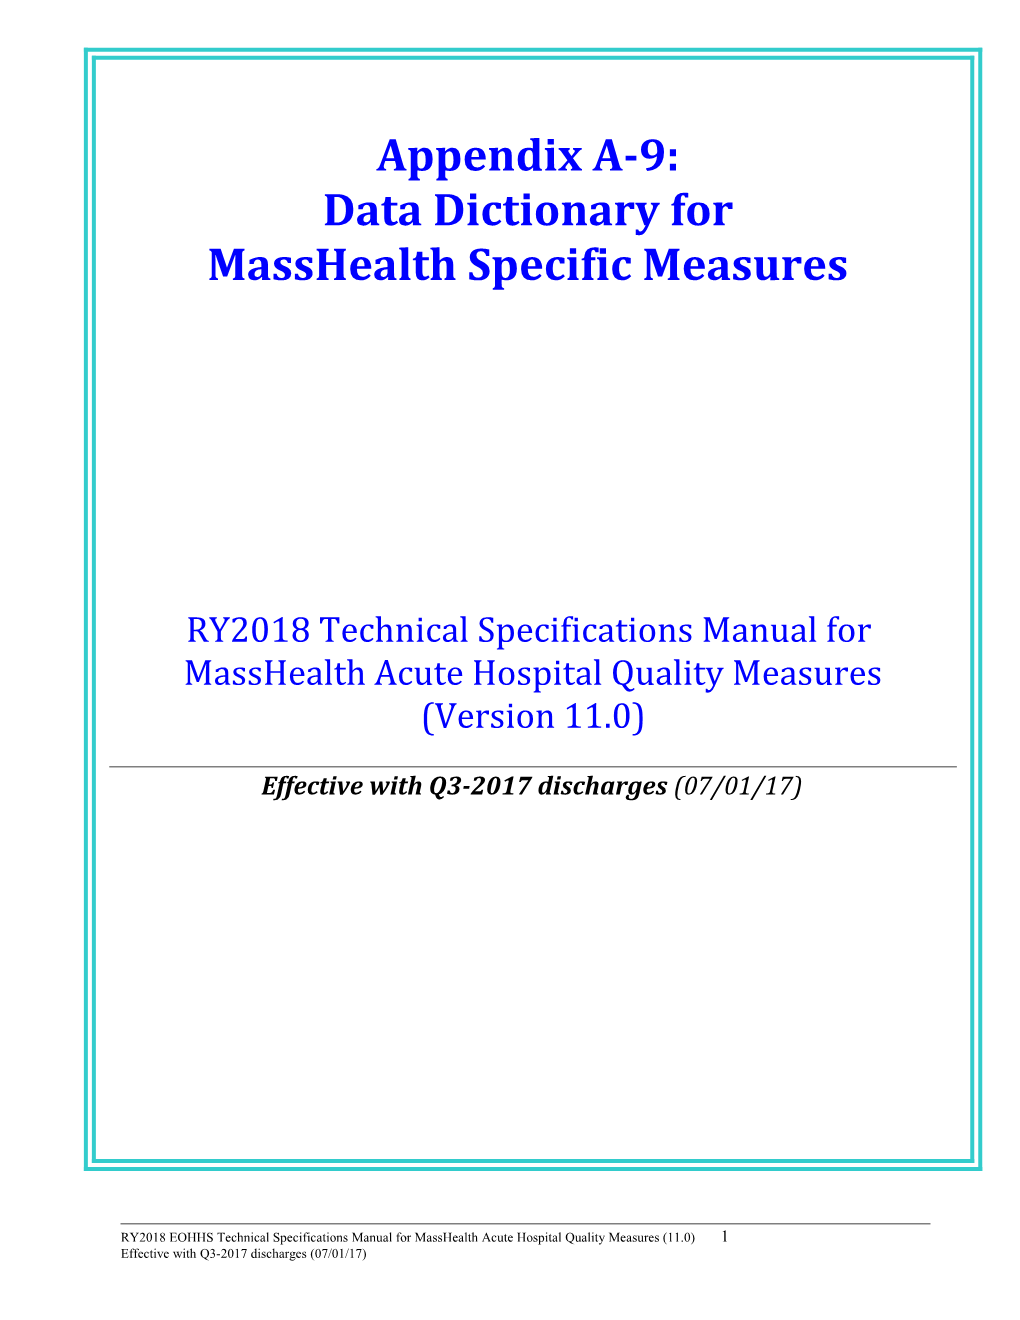 Consolidated Data Dictionary (MAT-4, MAT-5, NEWB-1, NEWB-2, CCM 1, 2, 3, Crosswalk)